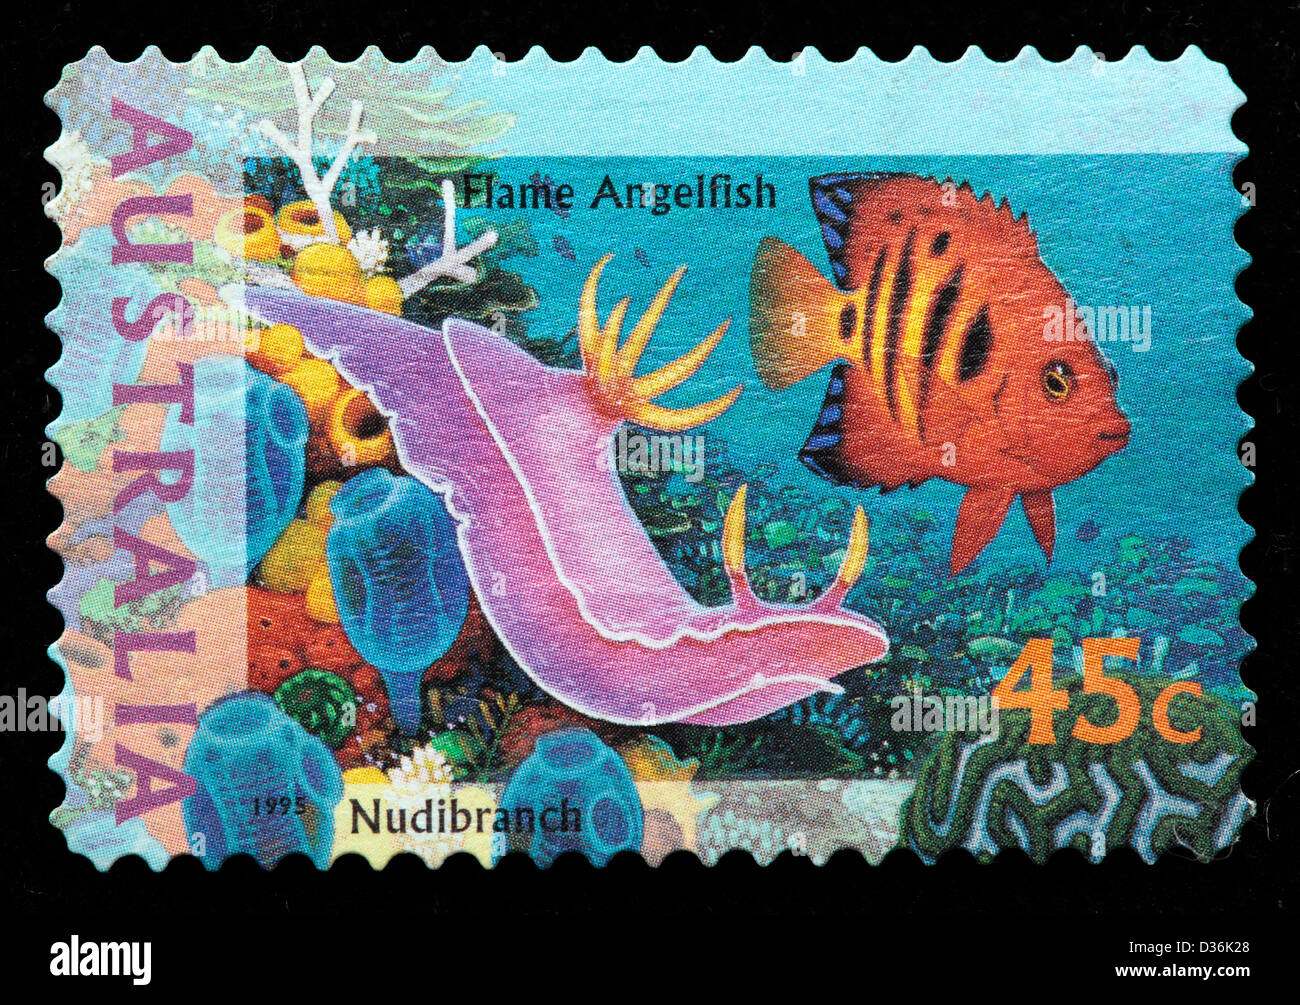 Fiamma angelfish, francobollo, Australia, 1995 Foto Stock